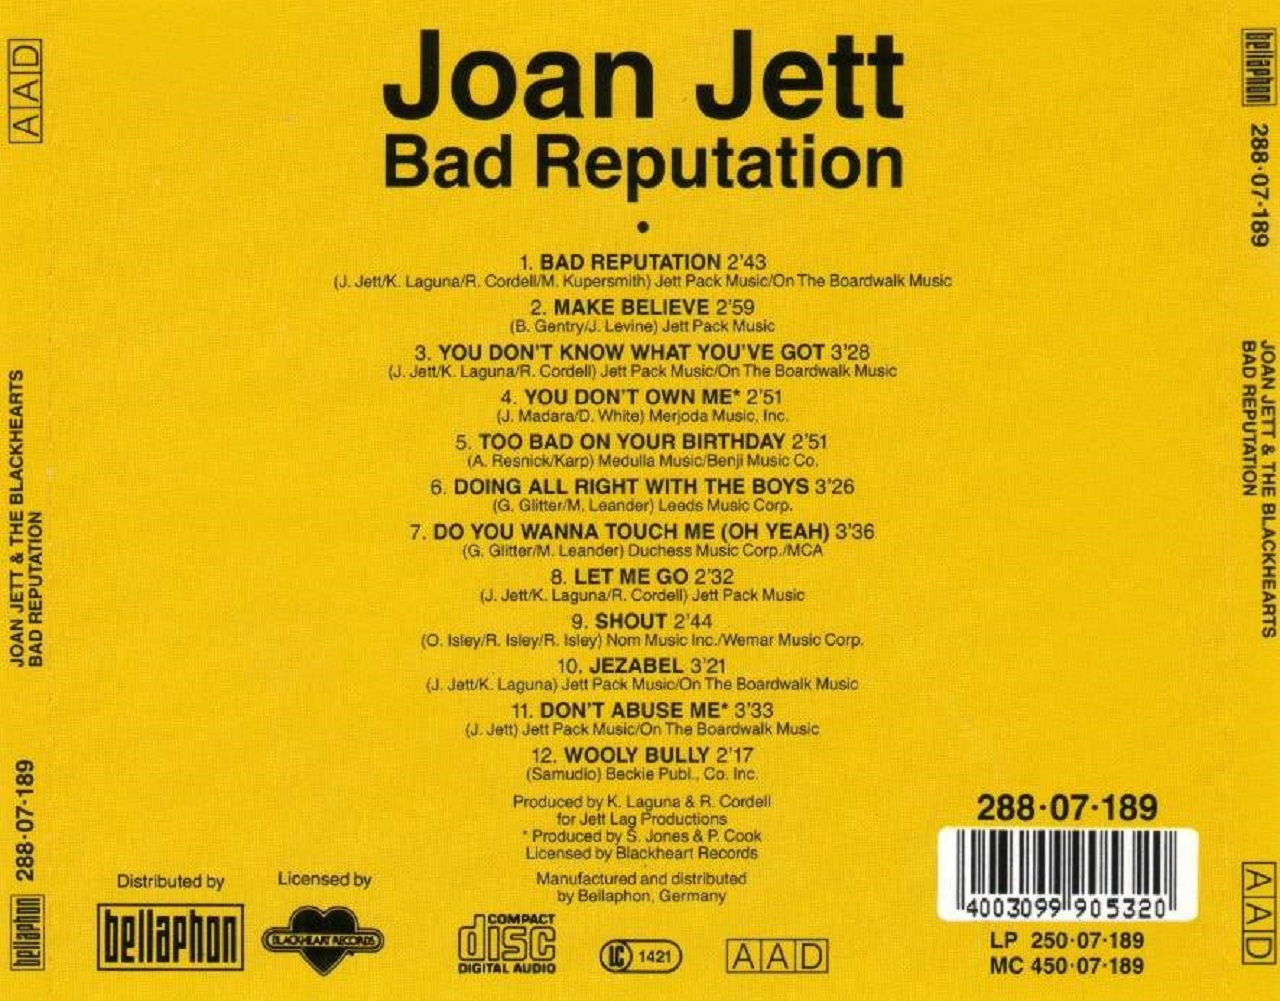 Bad reputation joan jett lyrics